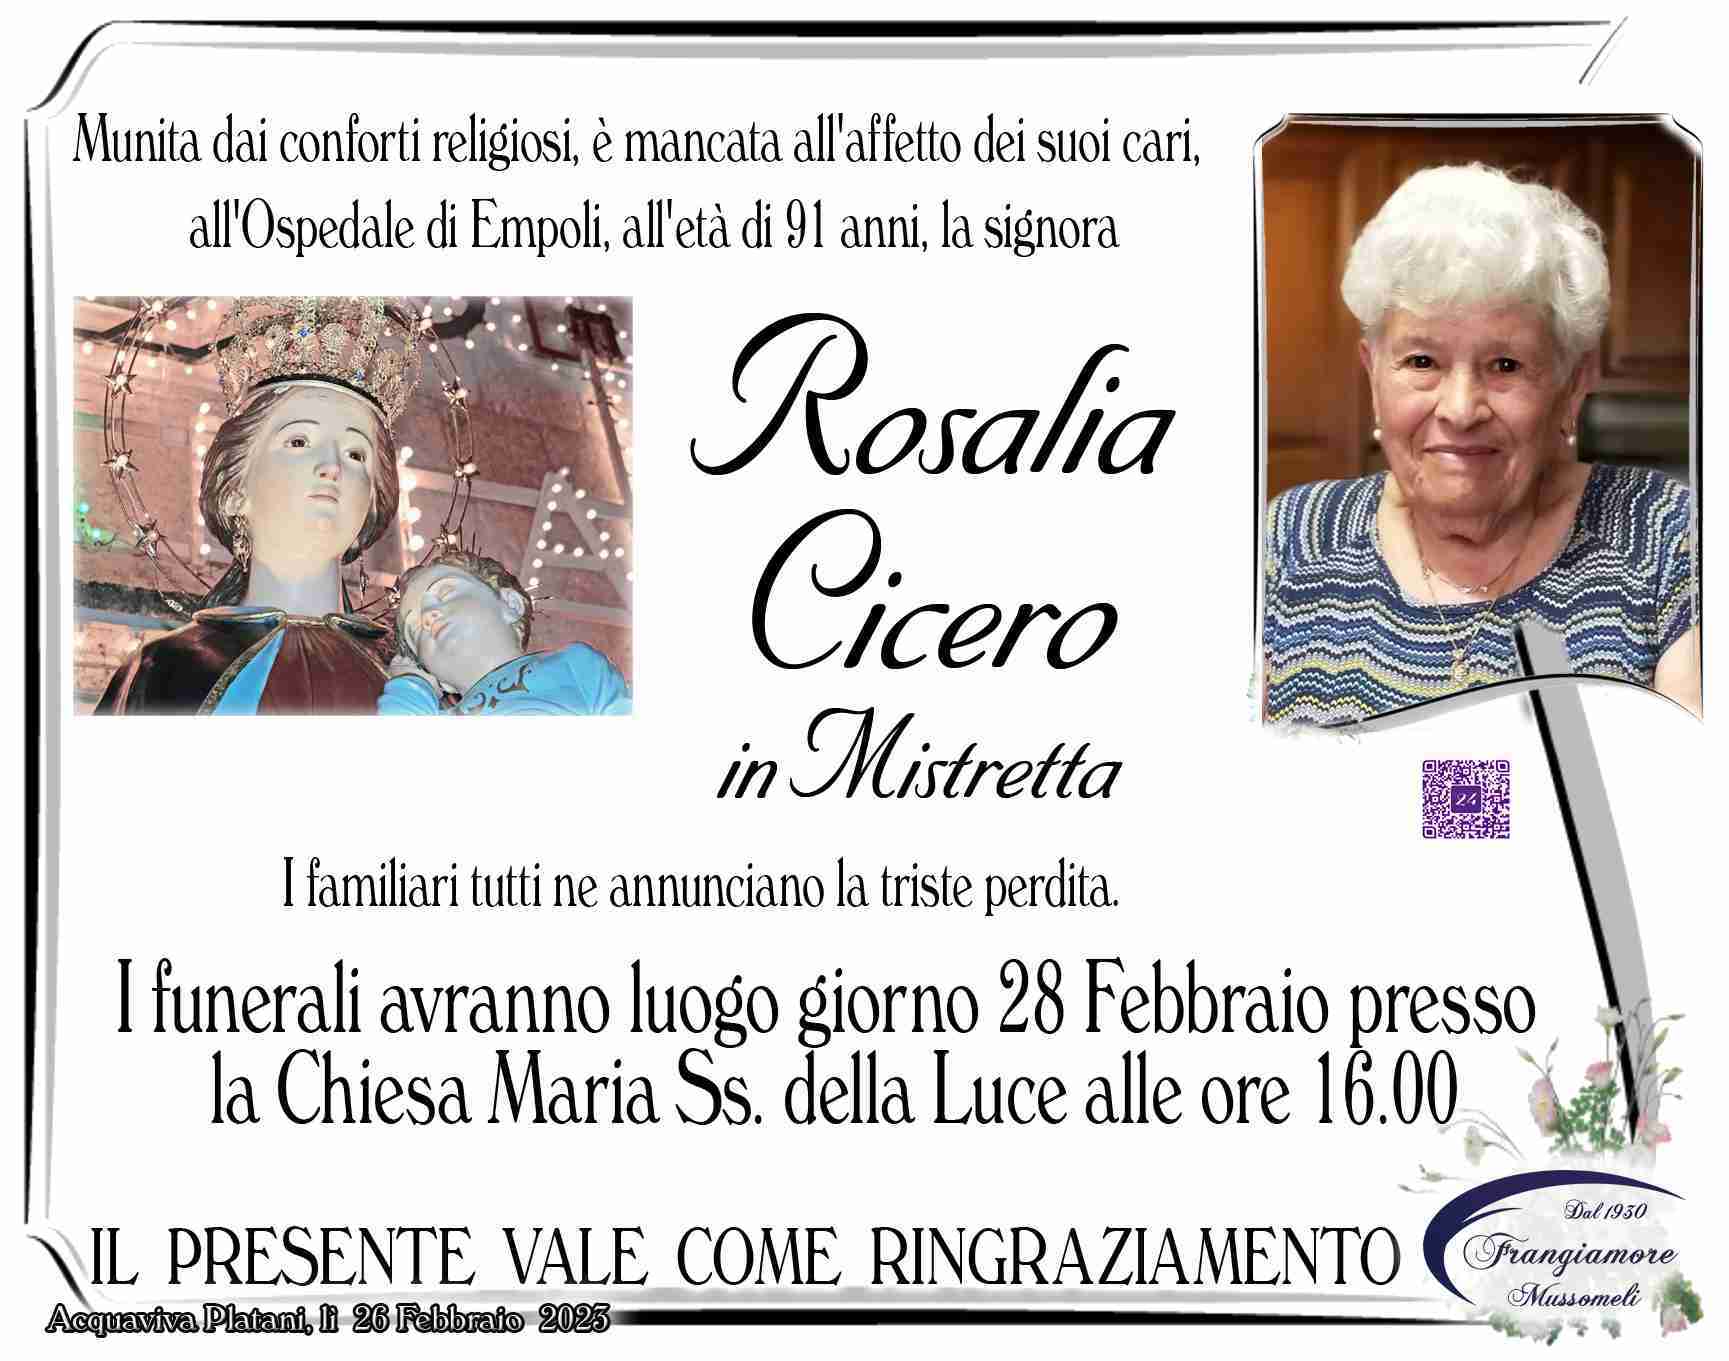 Rosalia Cicero